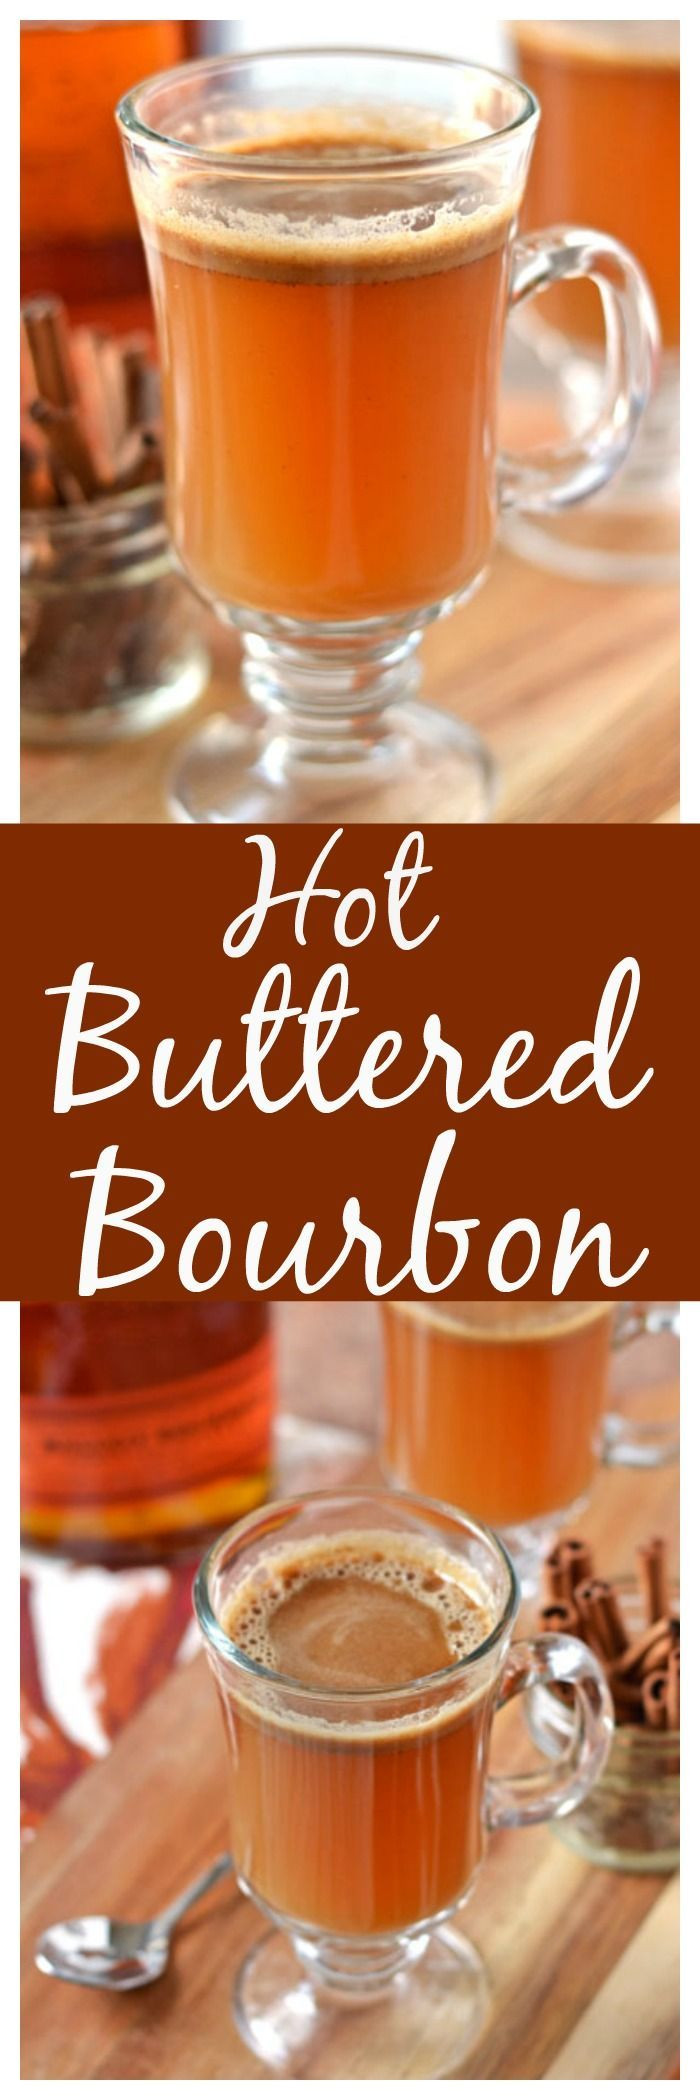 Bourbon Christmas Drinks
 Best 20 Hot toddy ideas on Pinterest